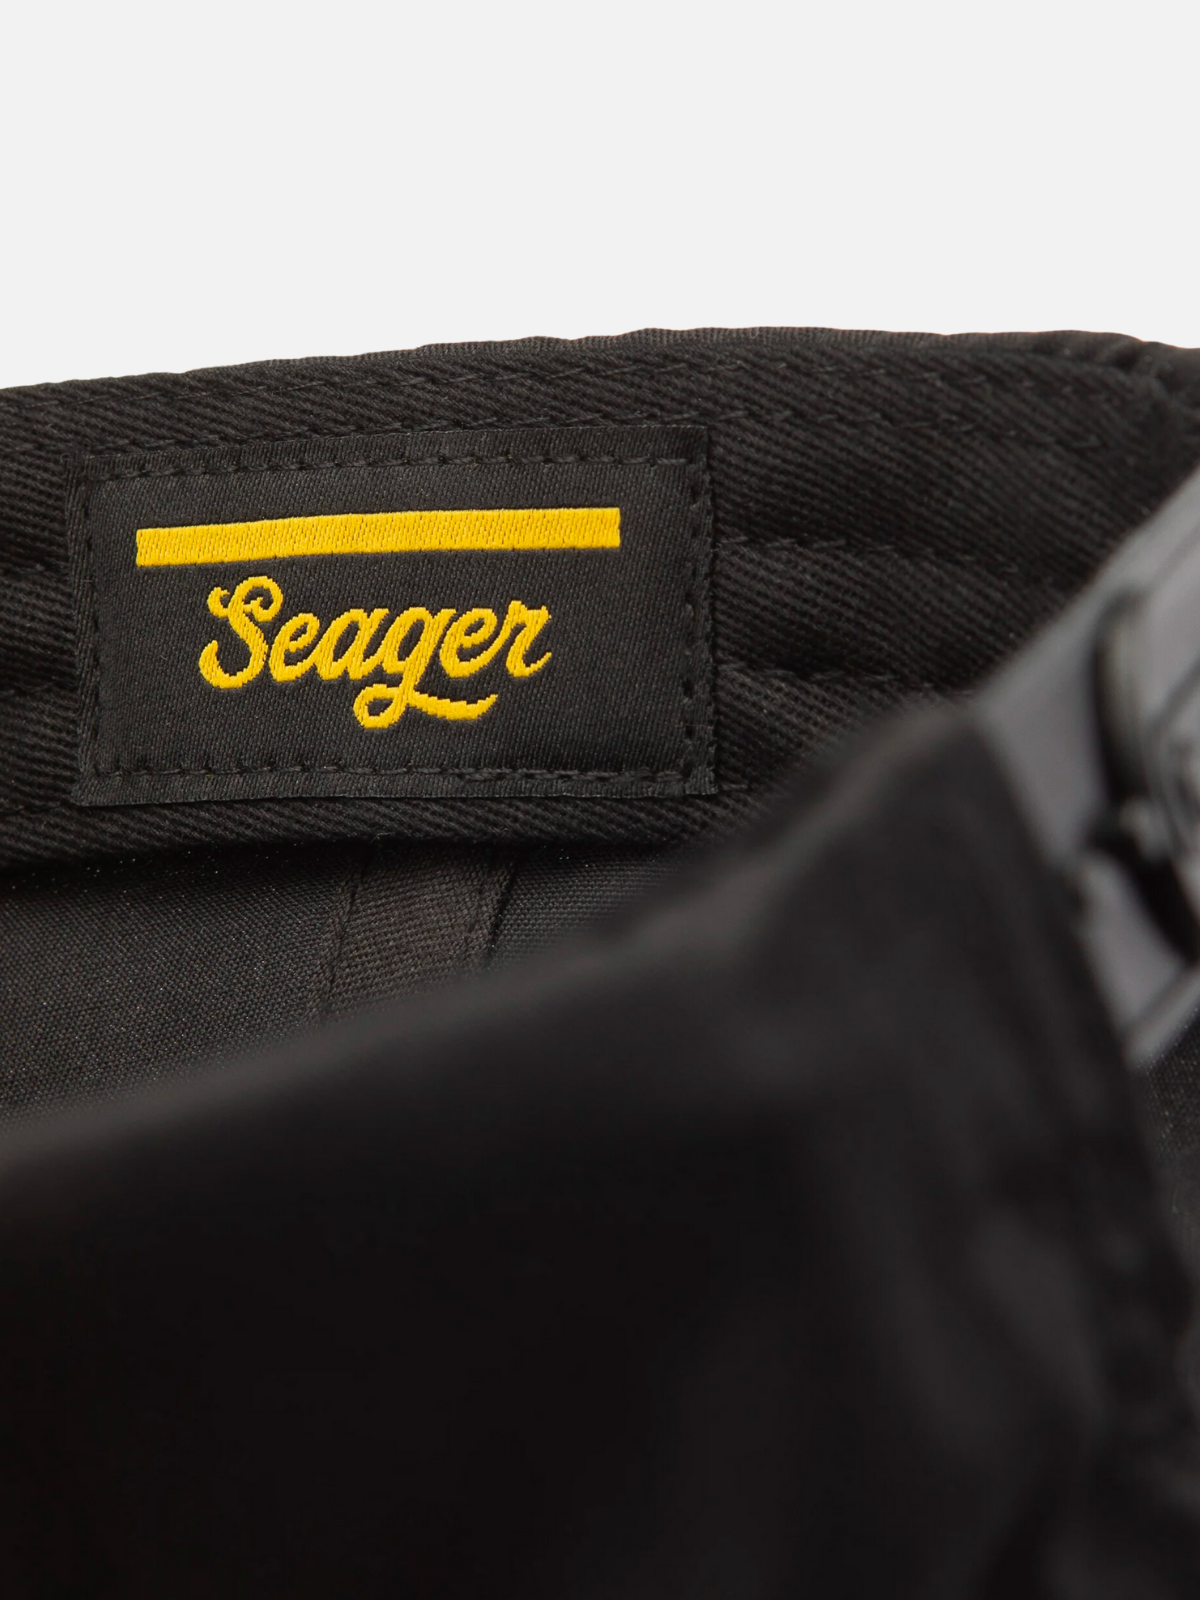 seager bradley snapback trucker hat black cotton polyester blend eagle embroidered design kempt athens ga georgia men's clothing store